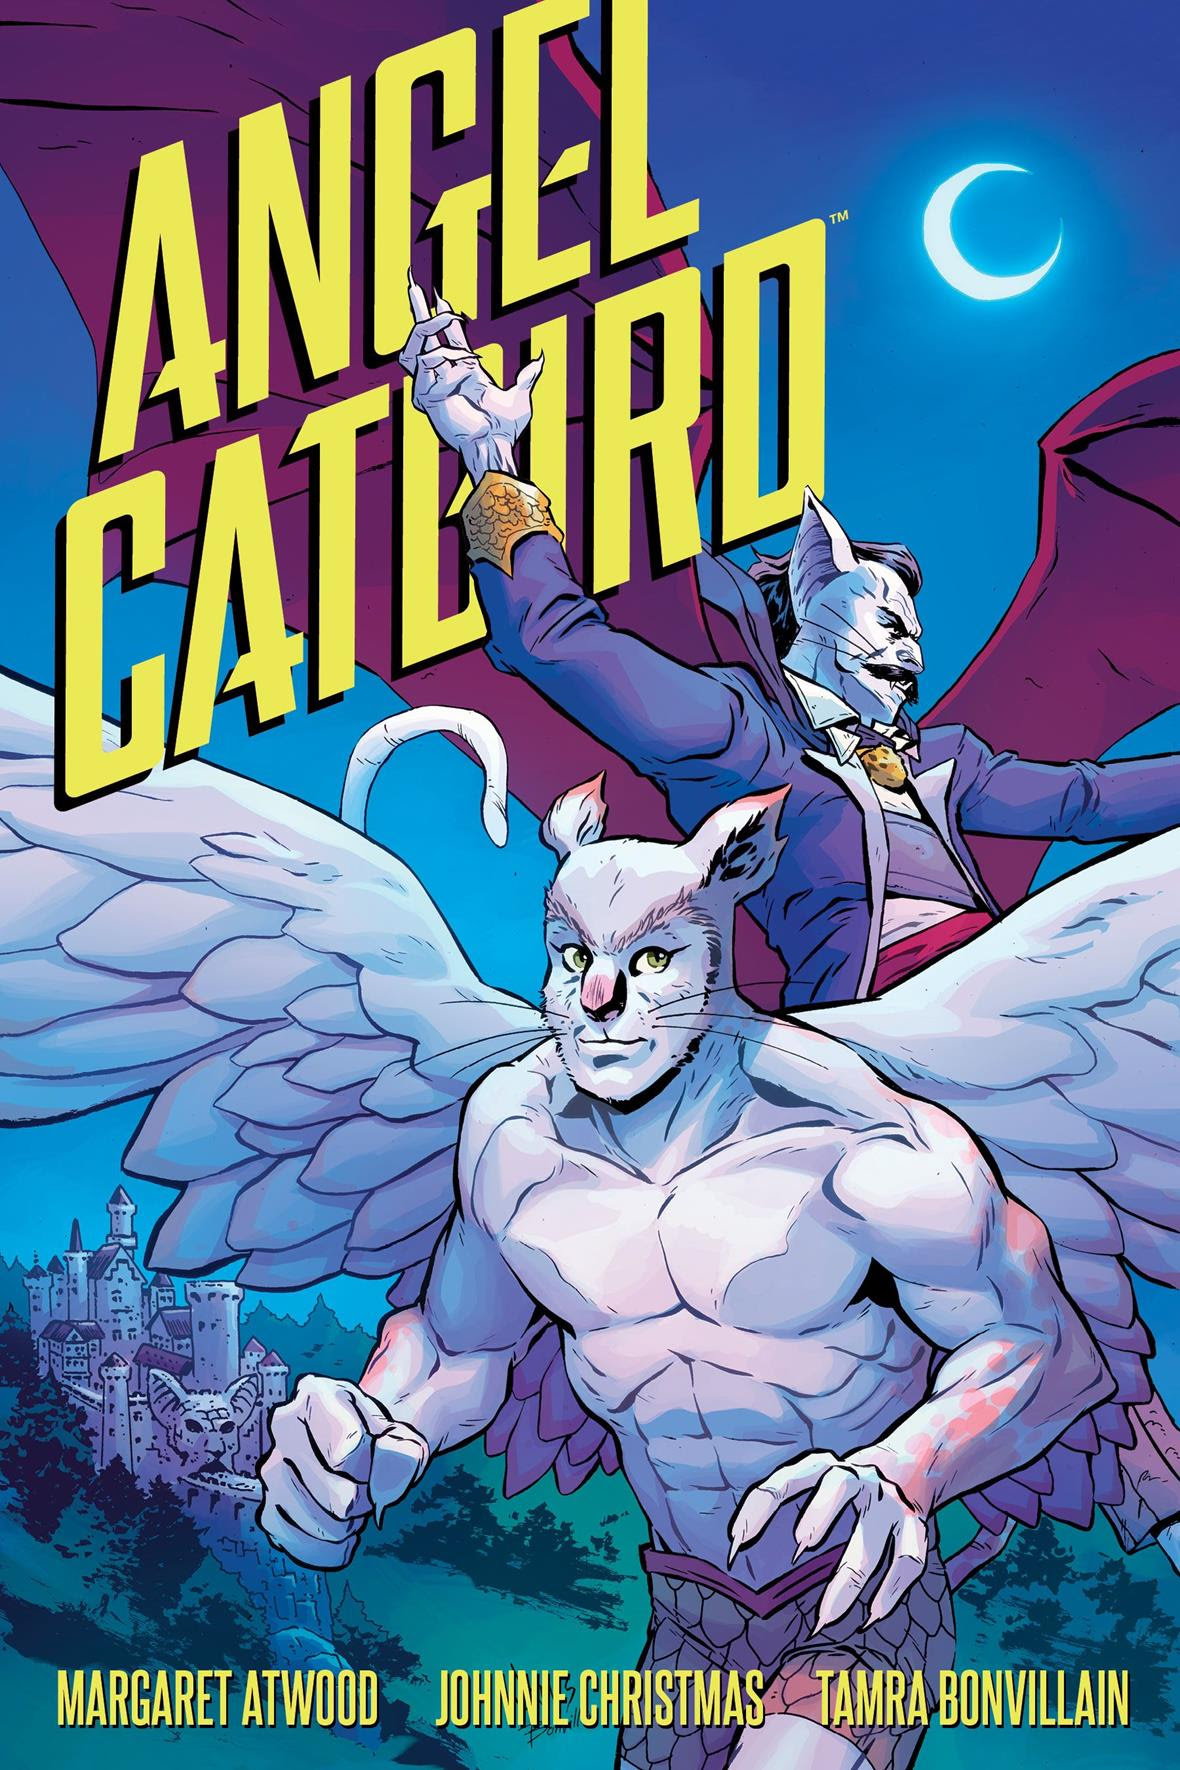 Angel Catbird Volume 2